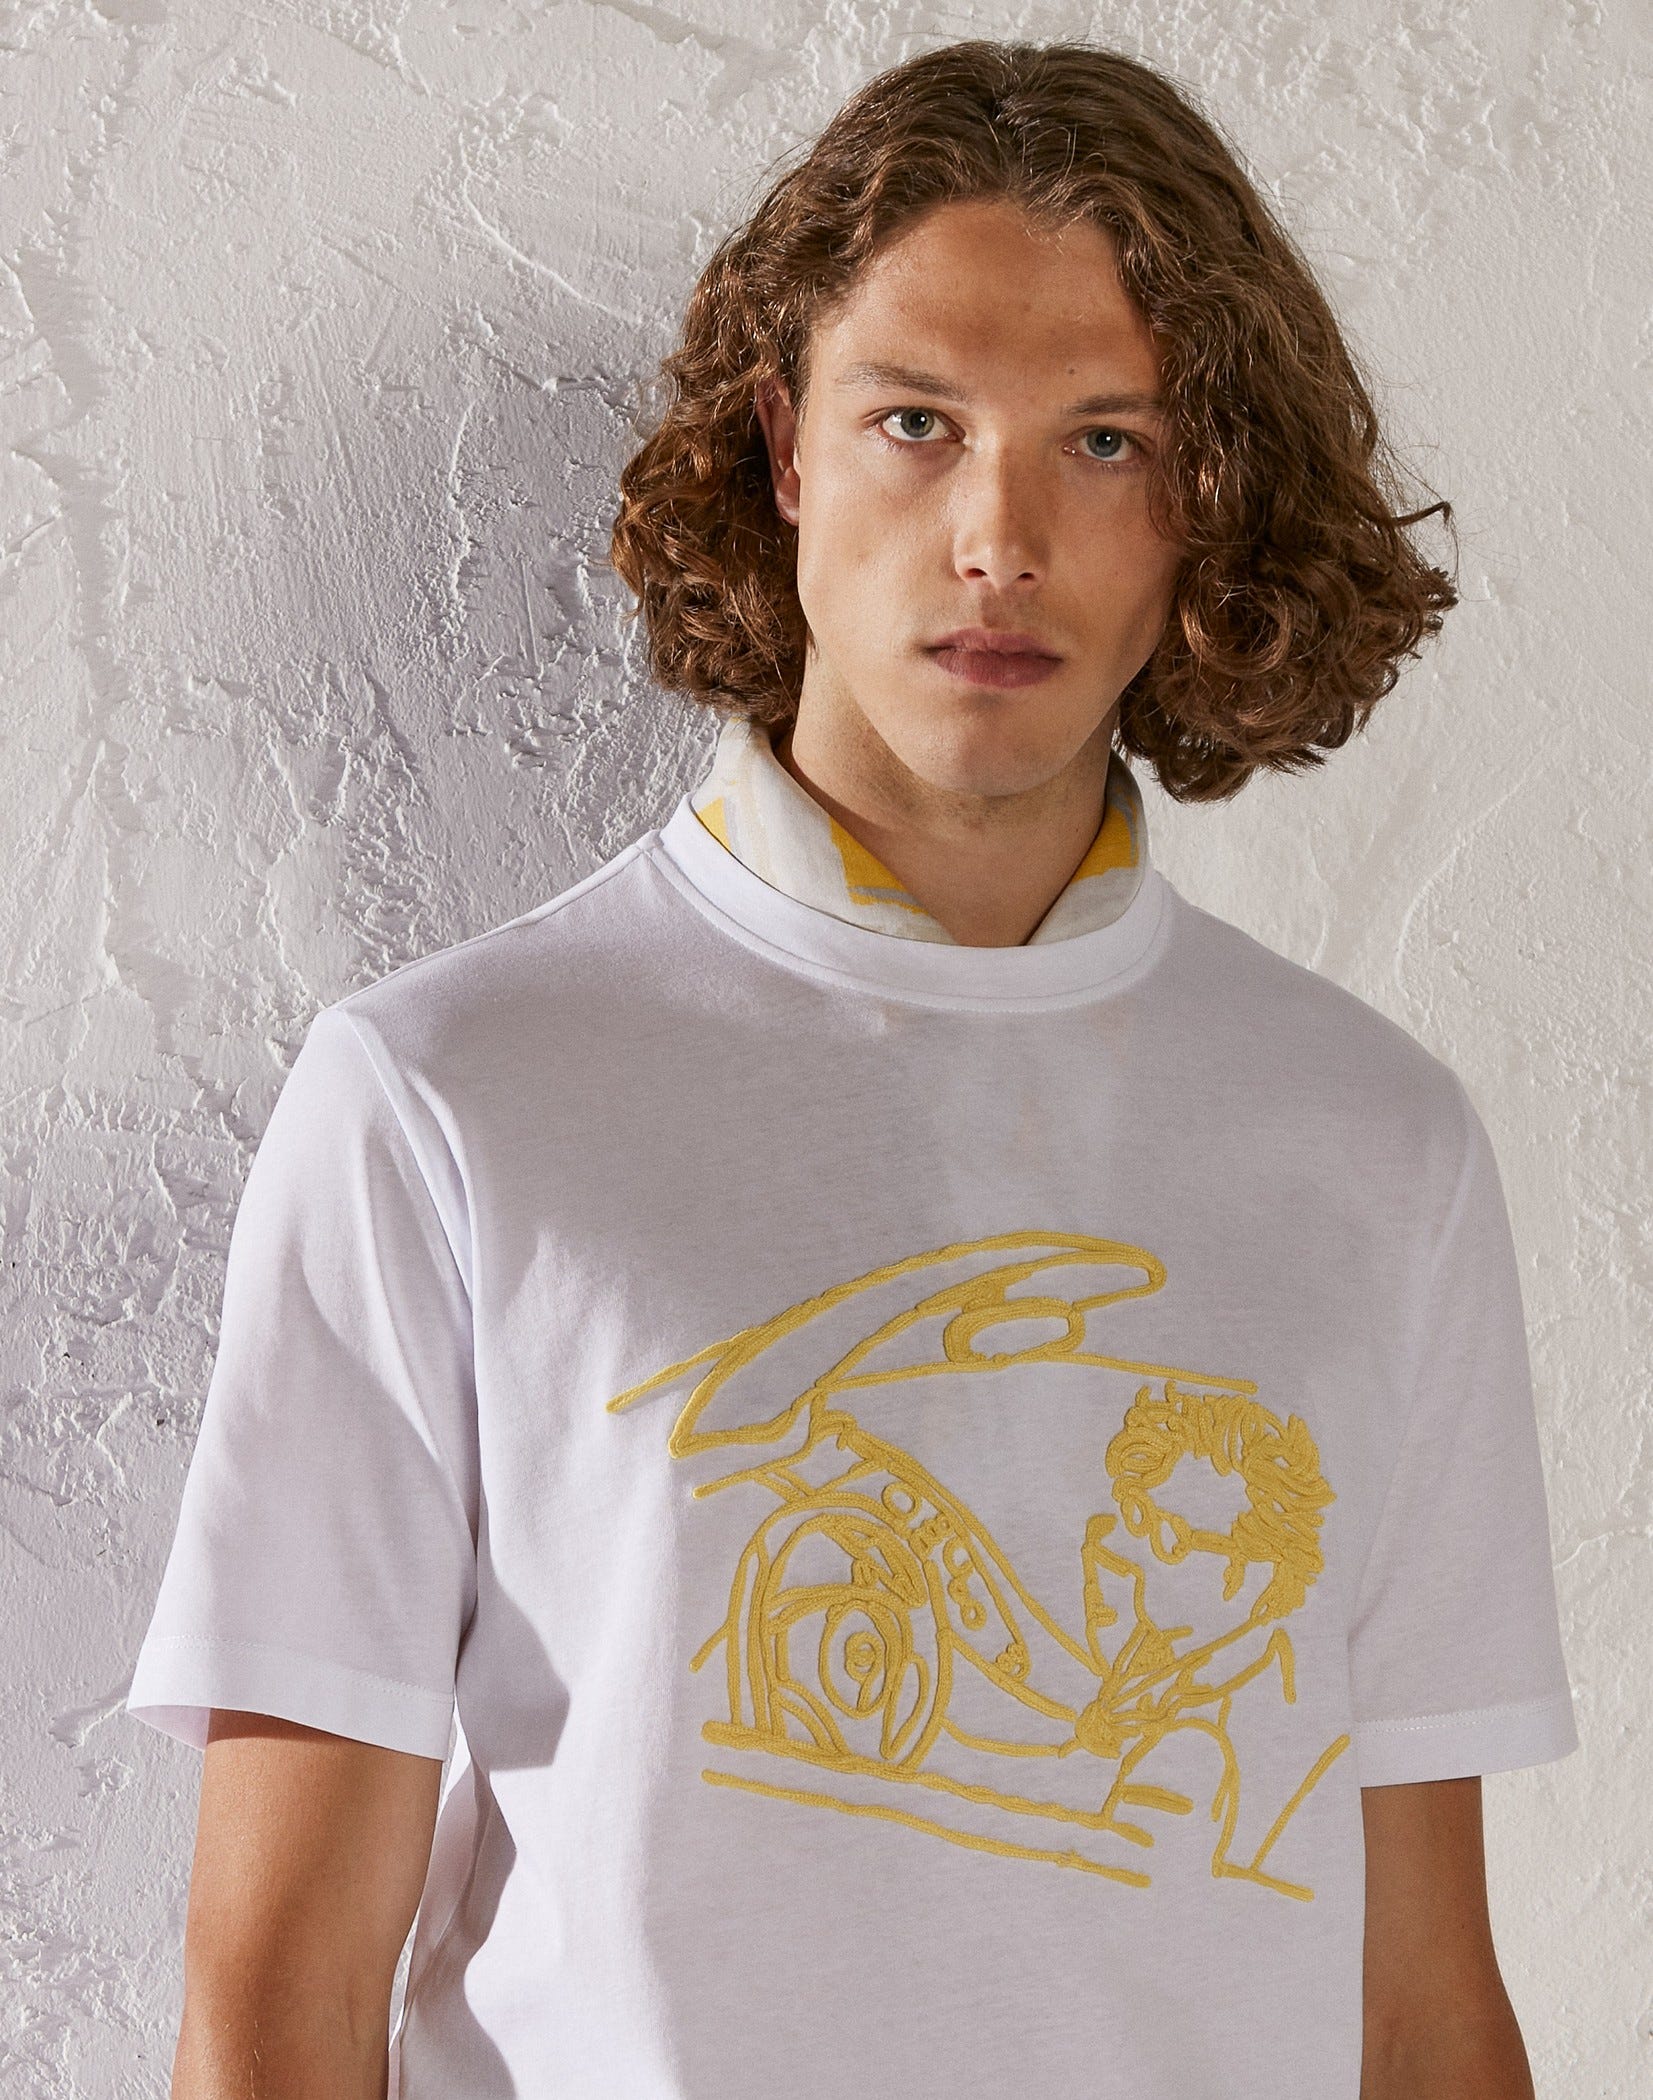 T-shirt with matching embroidery - Luigi Lardini capsule